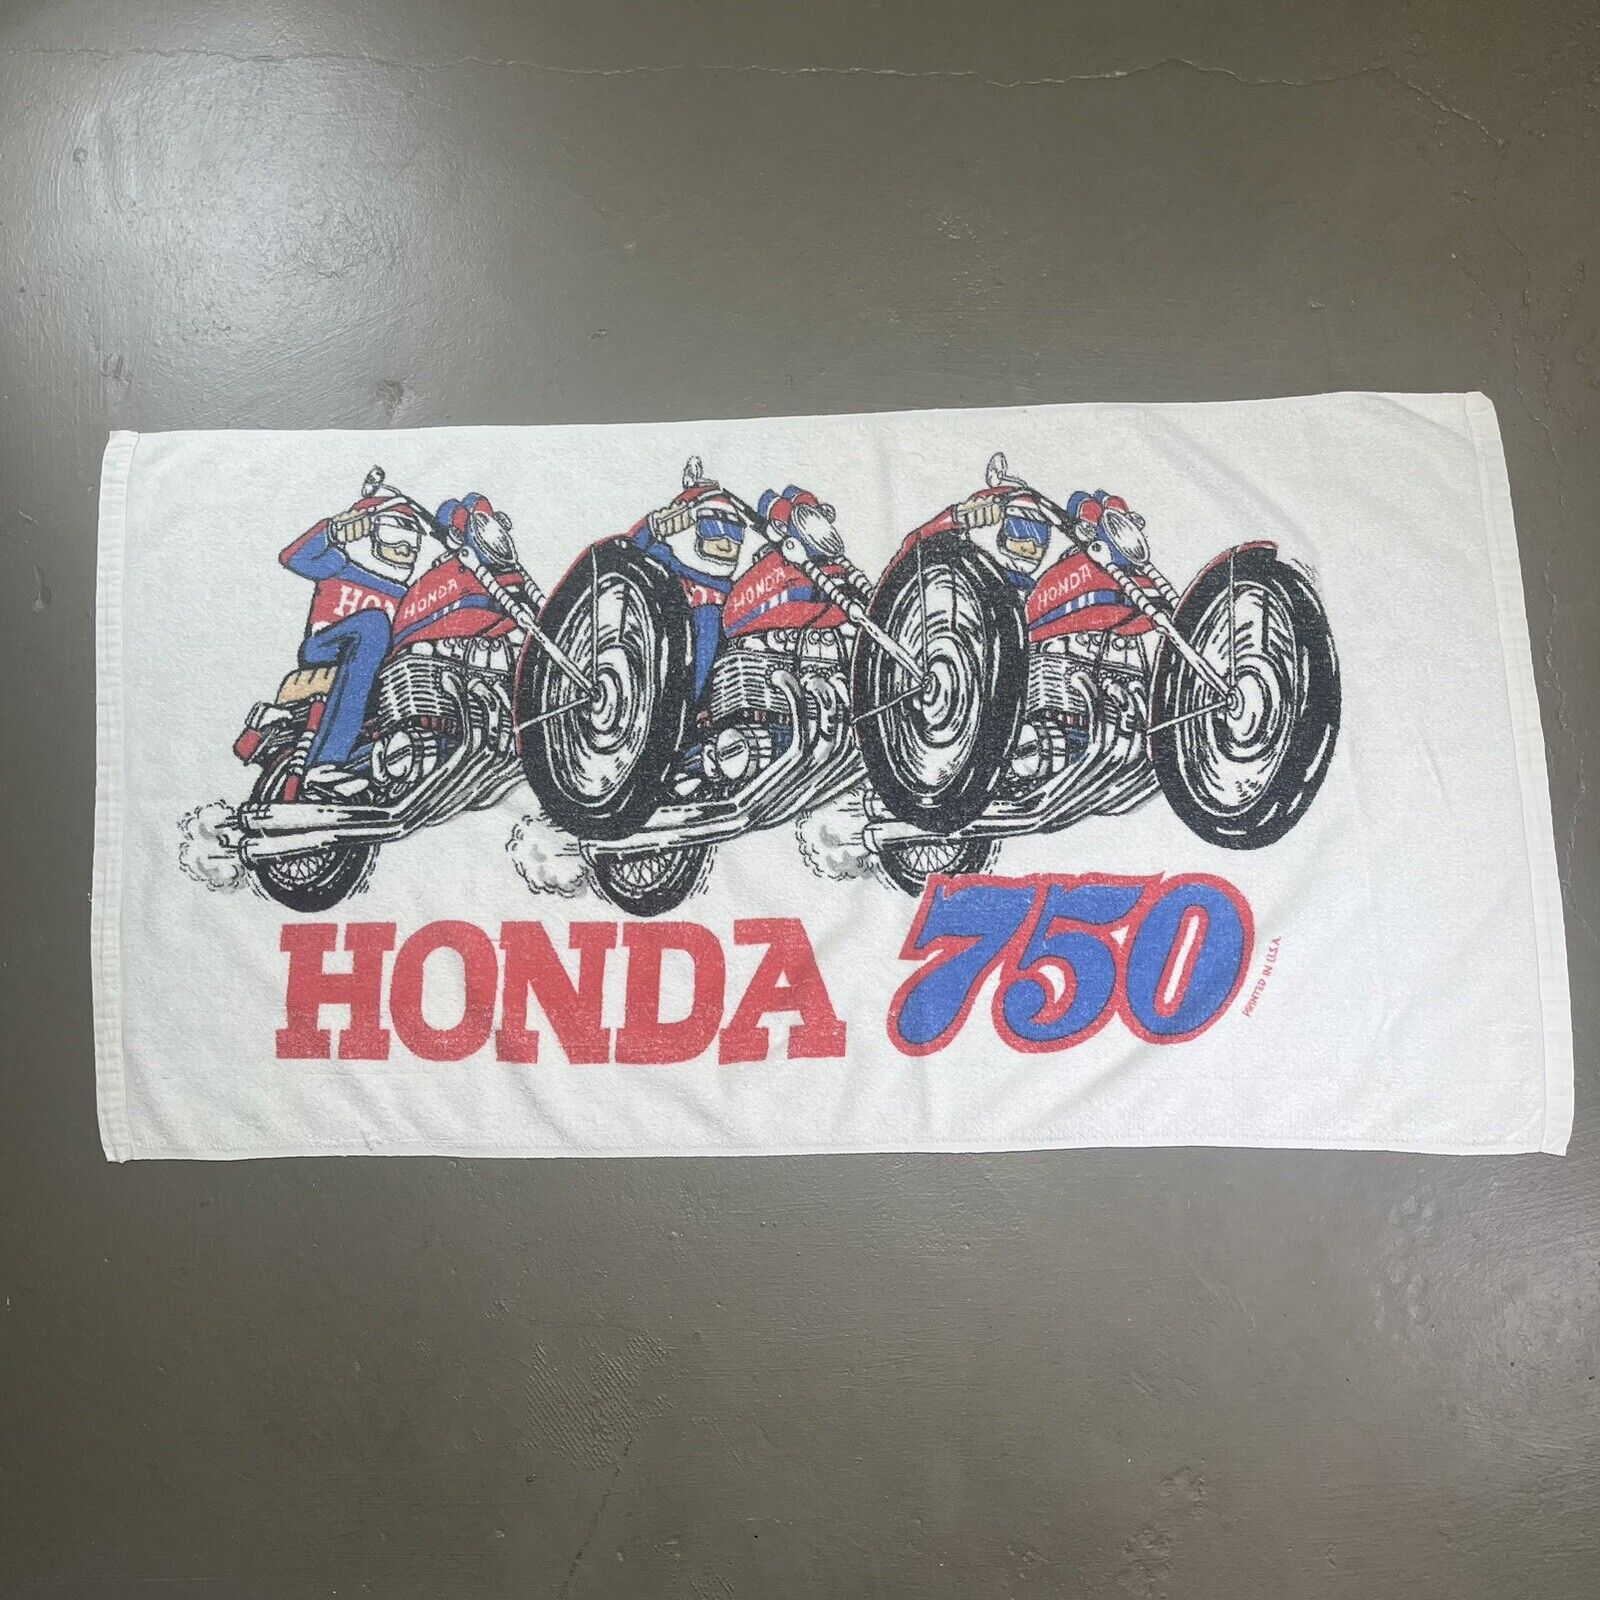 Vintage Honda Motorcycle Beach Towel 750 Large Cotton 80s Banner Art Motocross